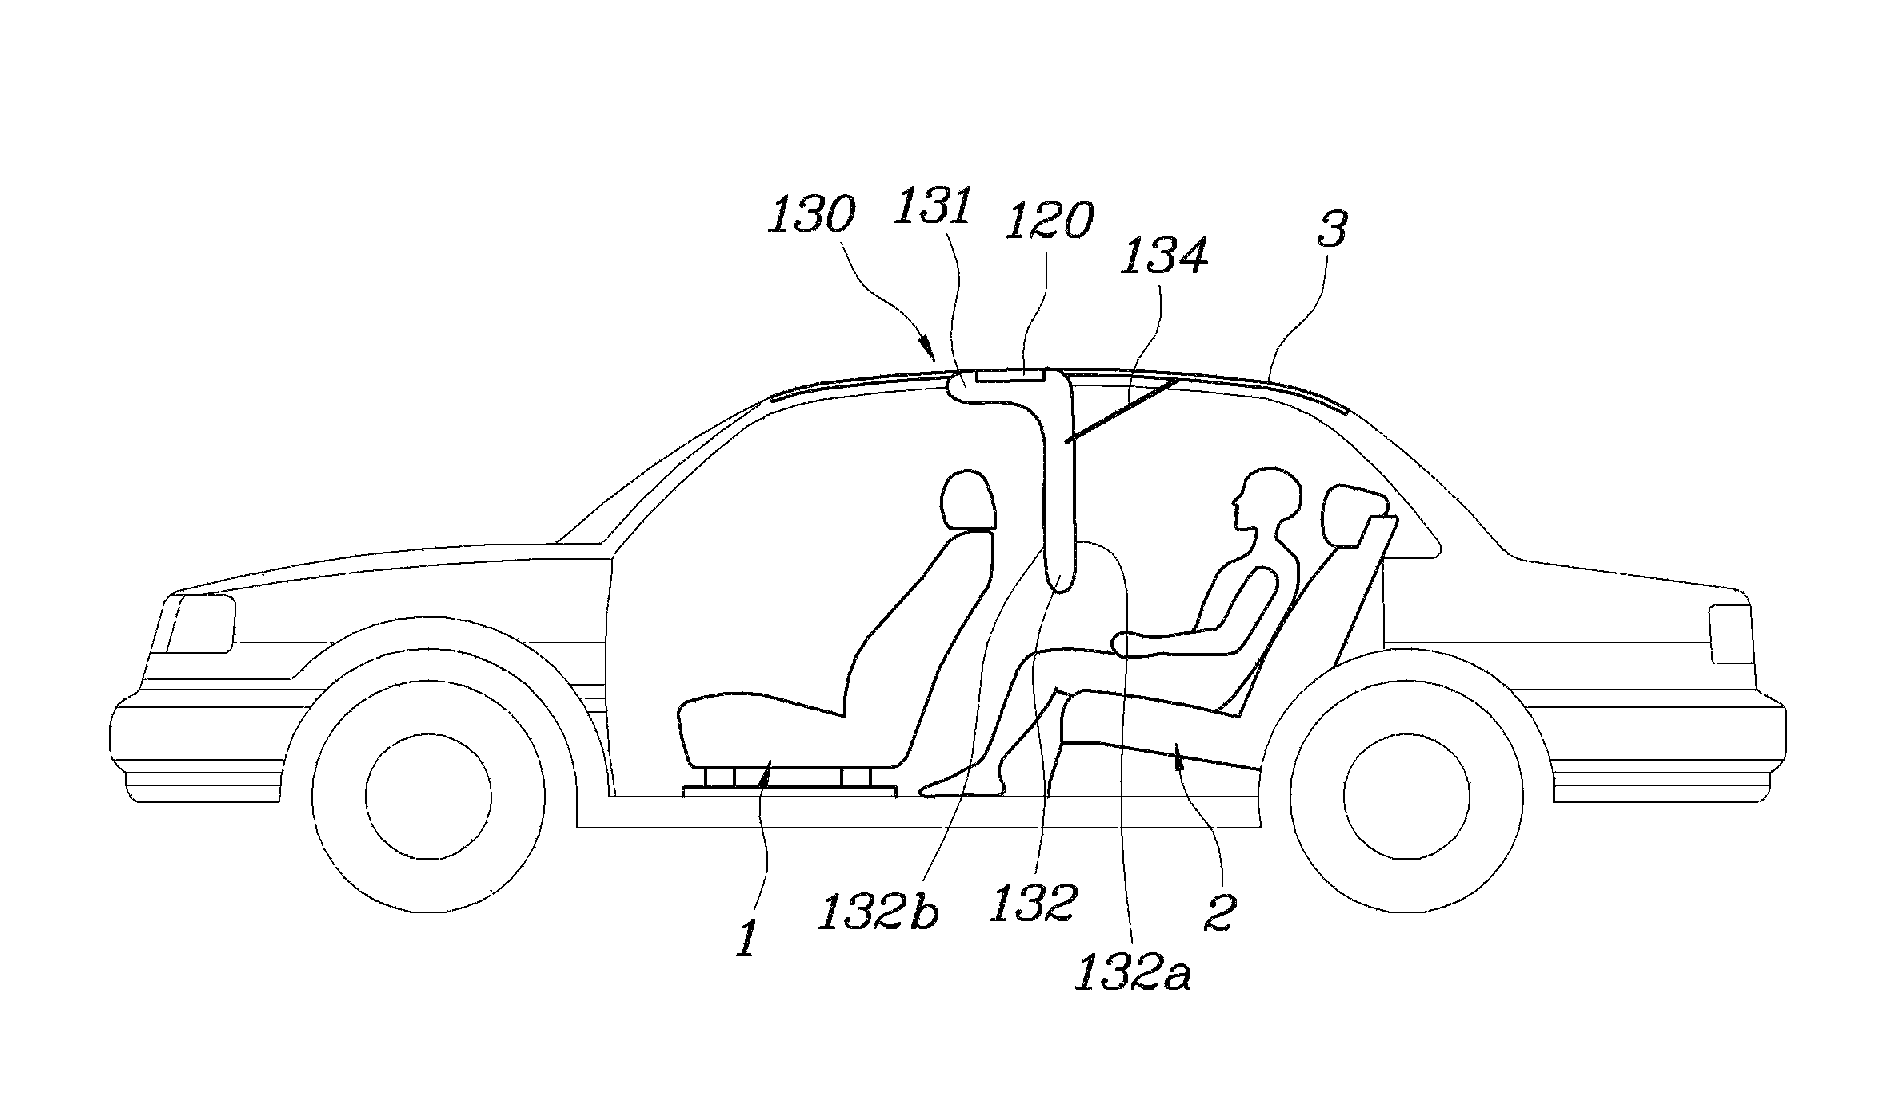 Internal airbag device